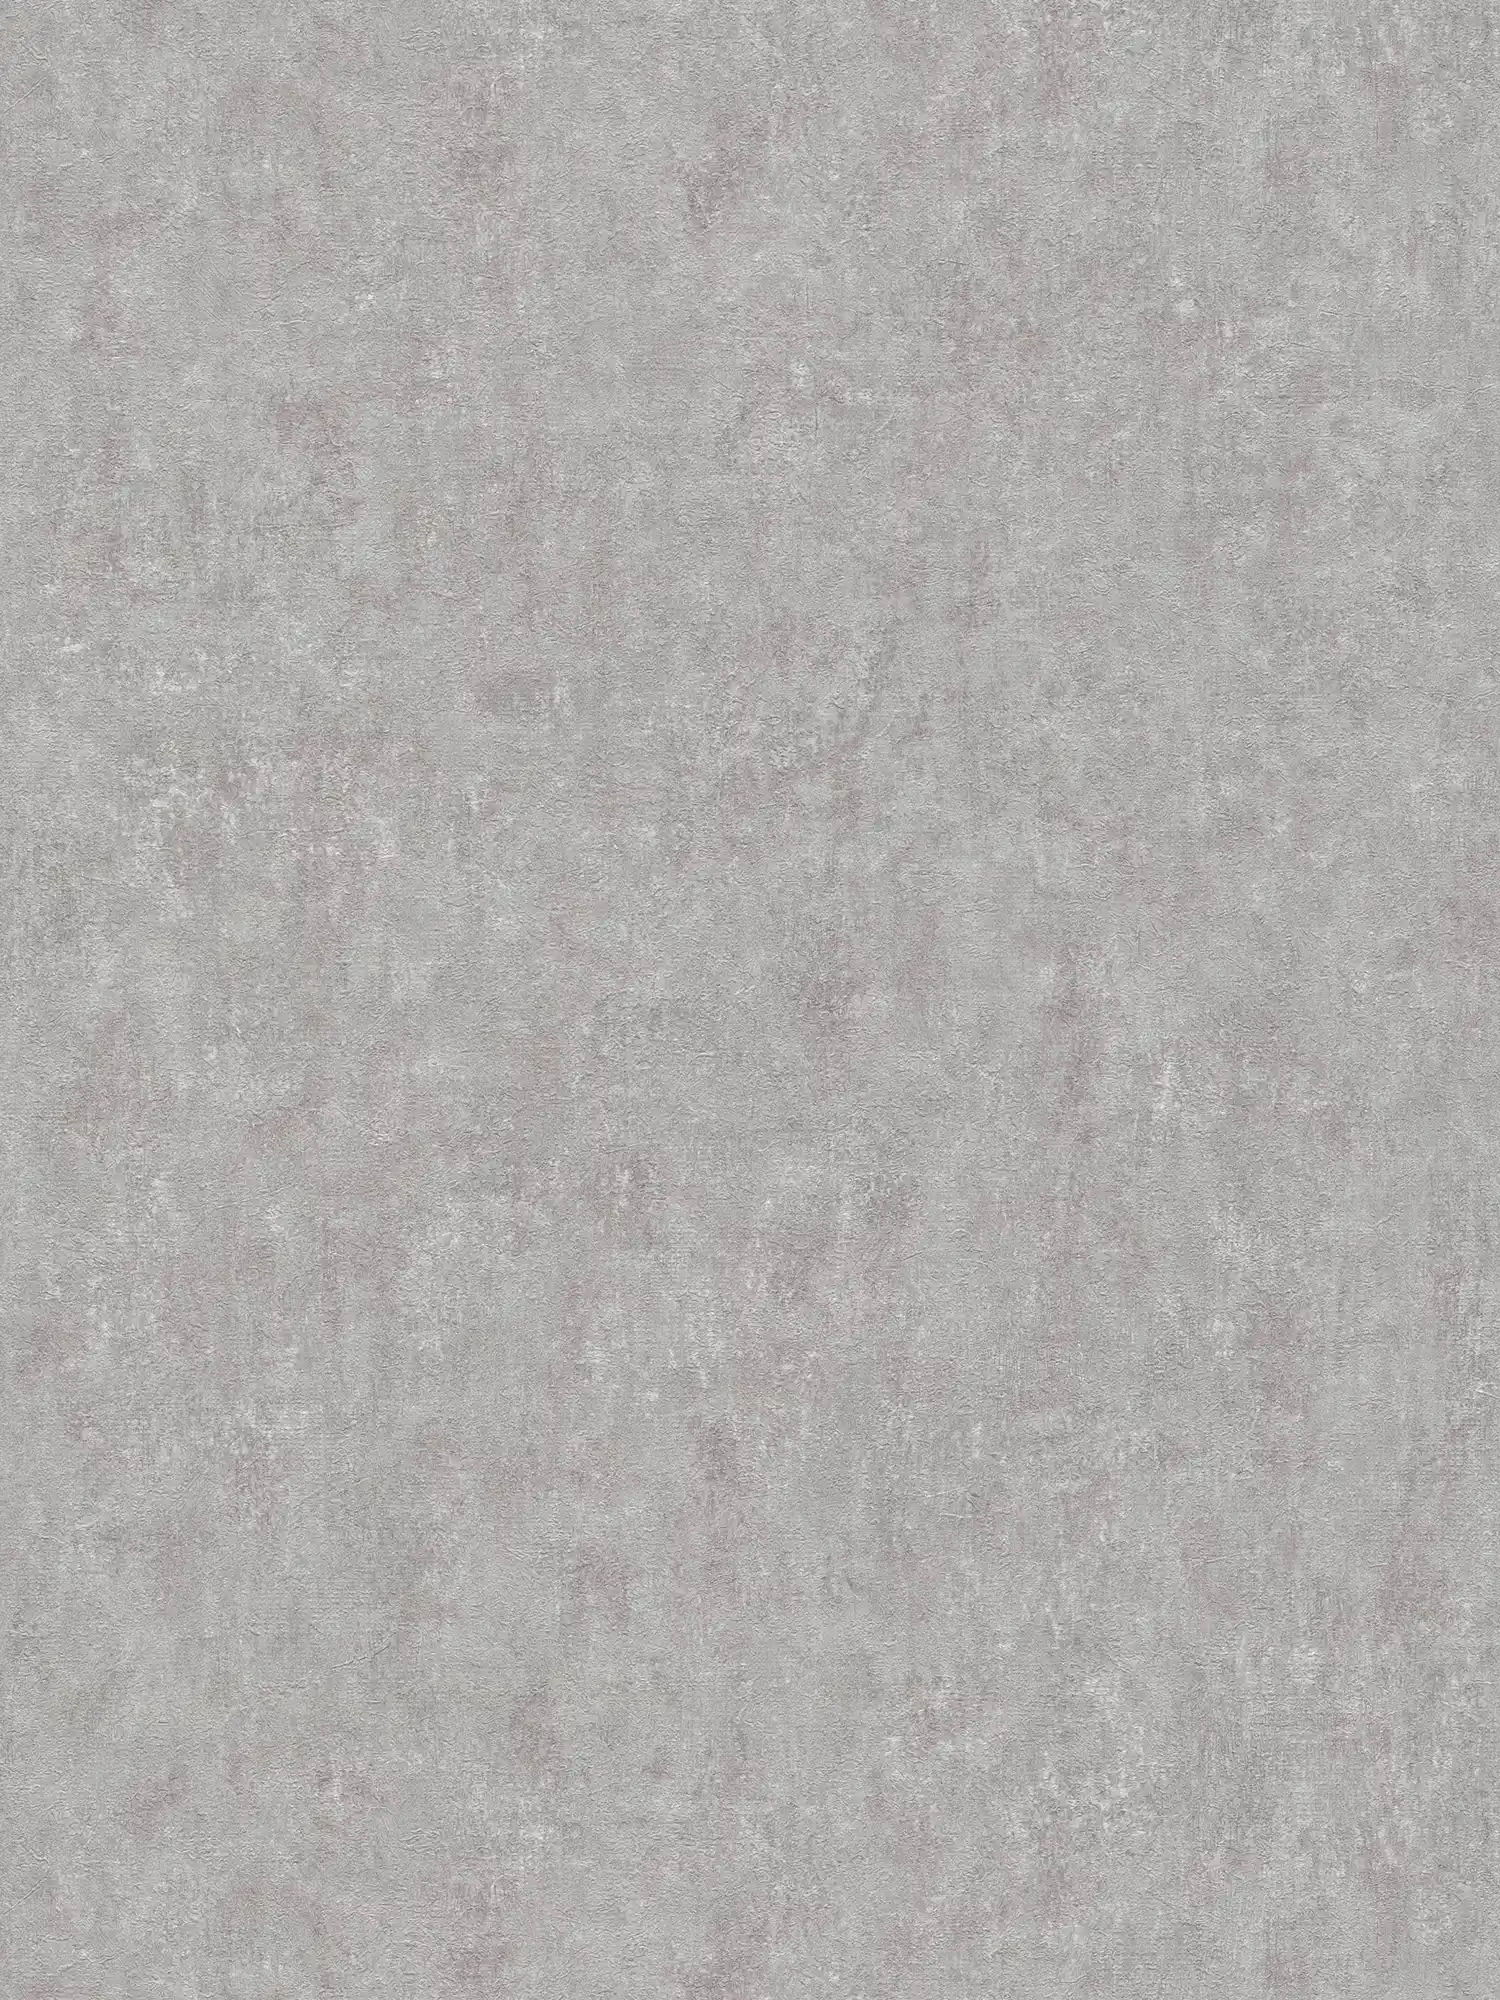 Graue Tapete Putzoptik Design mit Struktureffekt – Grau
